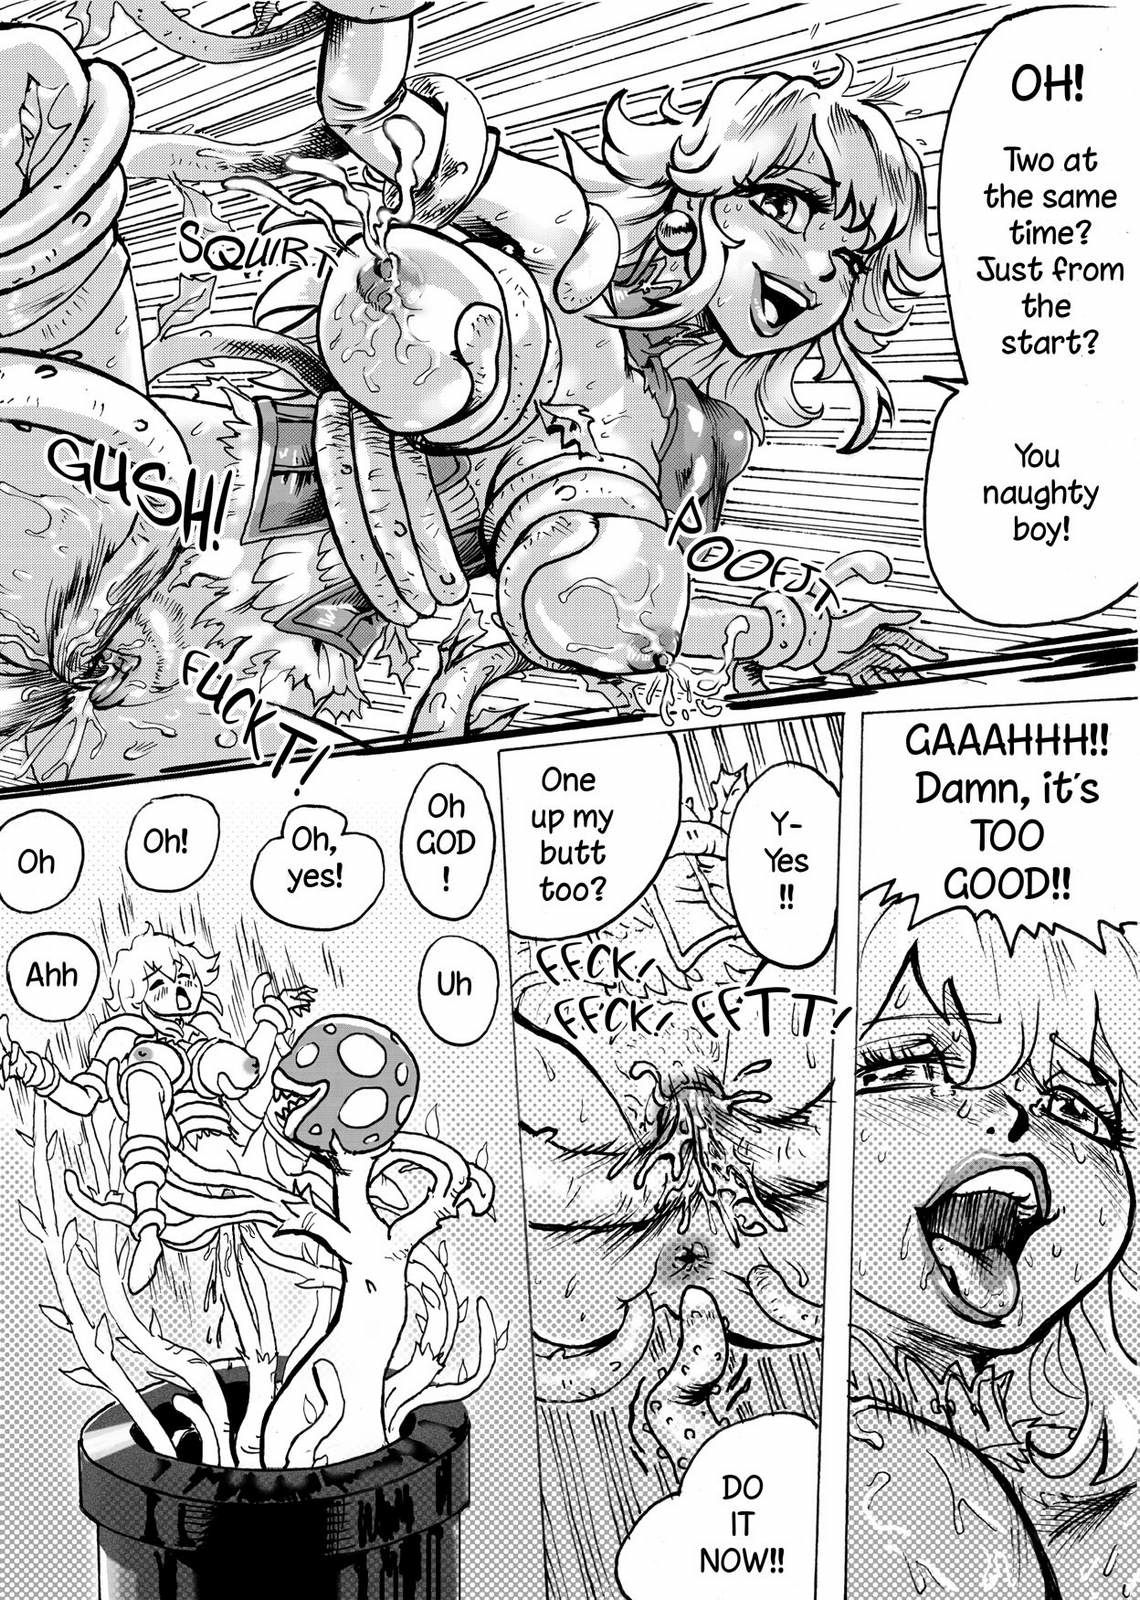 Super Wild Adventure 2 by Saikyo3B page 8